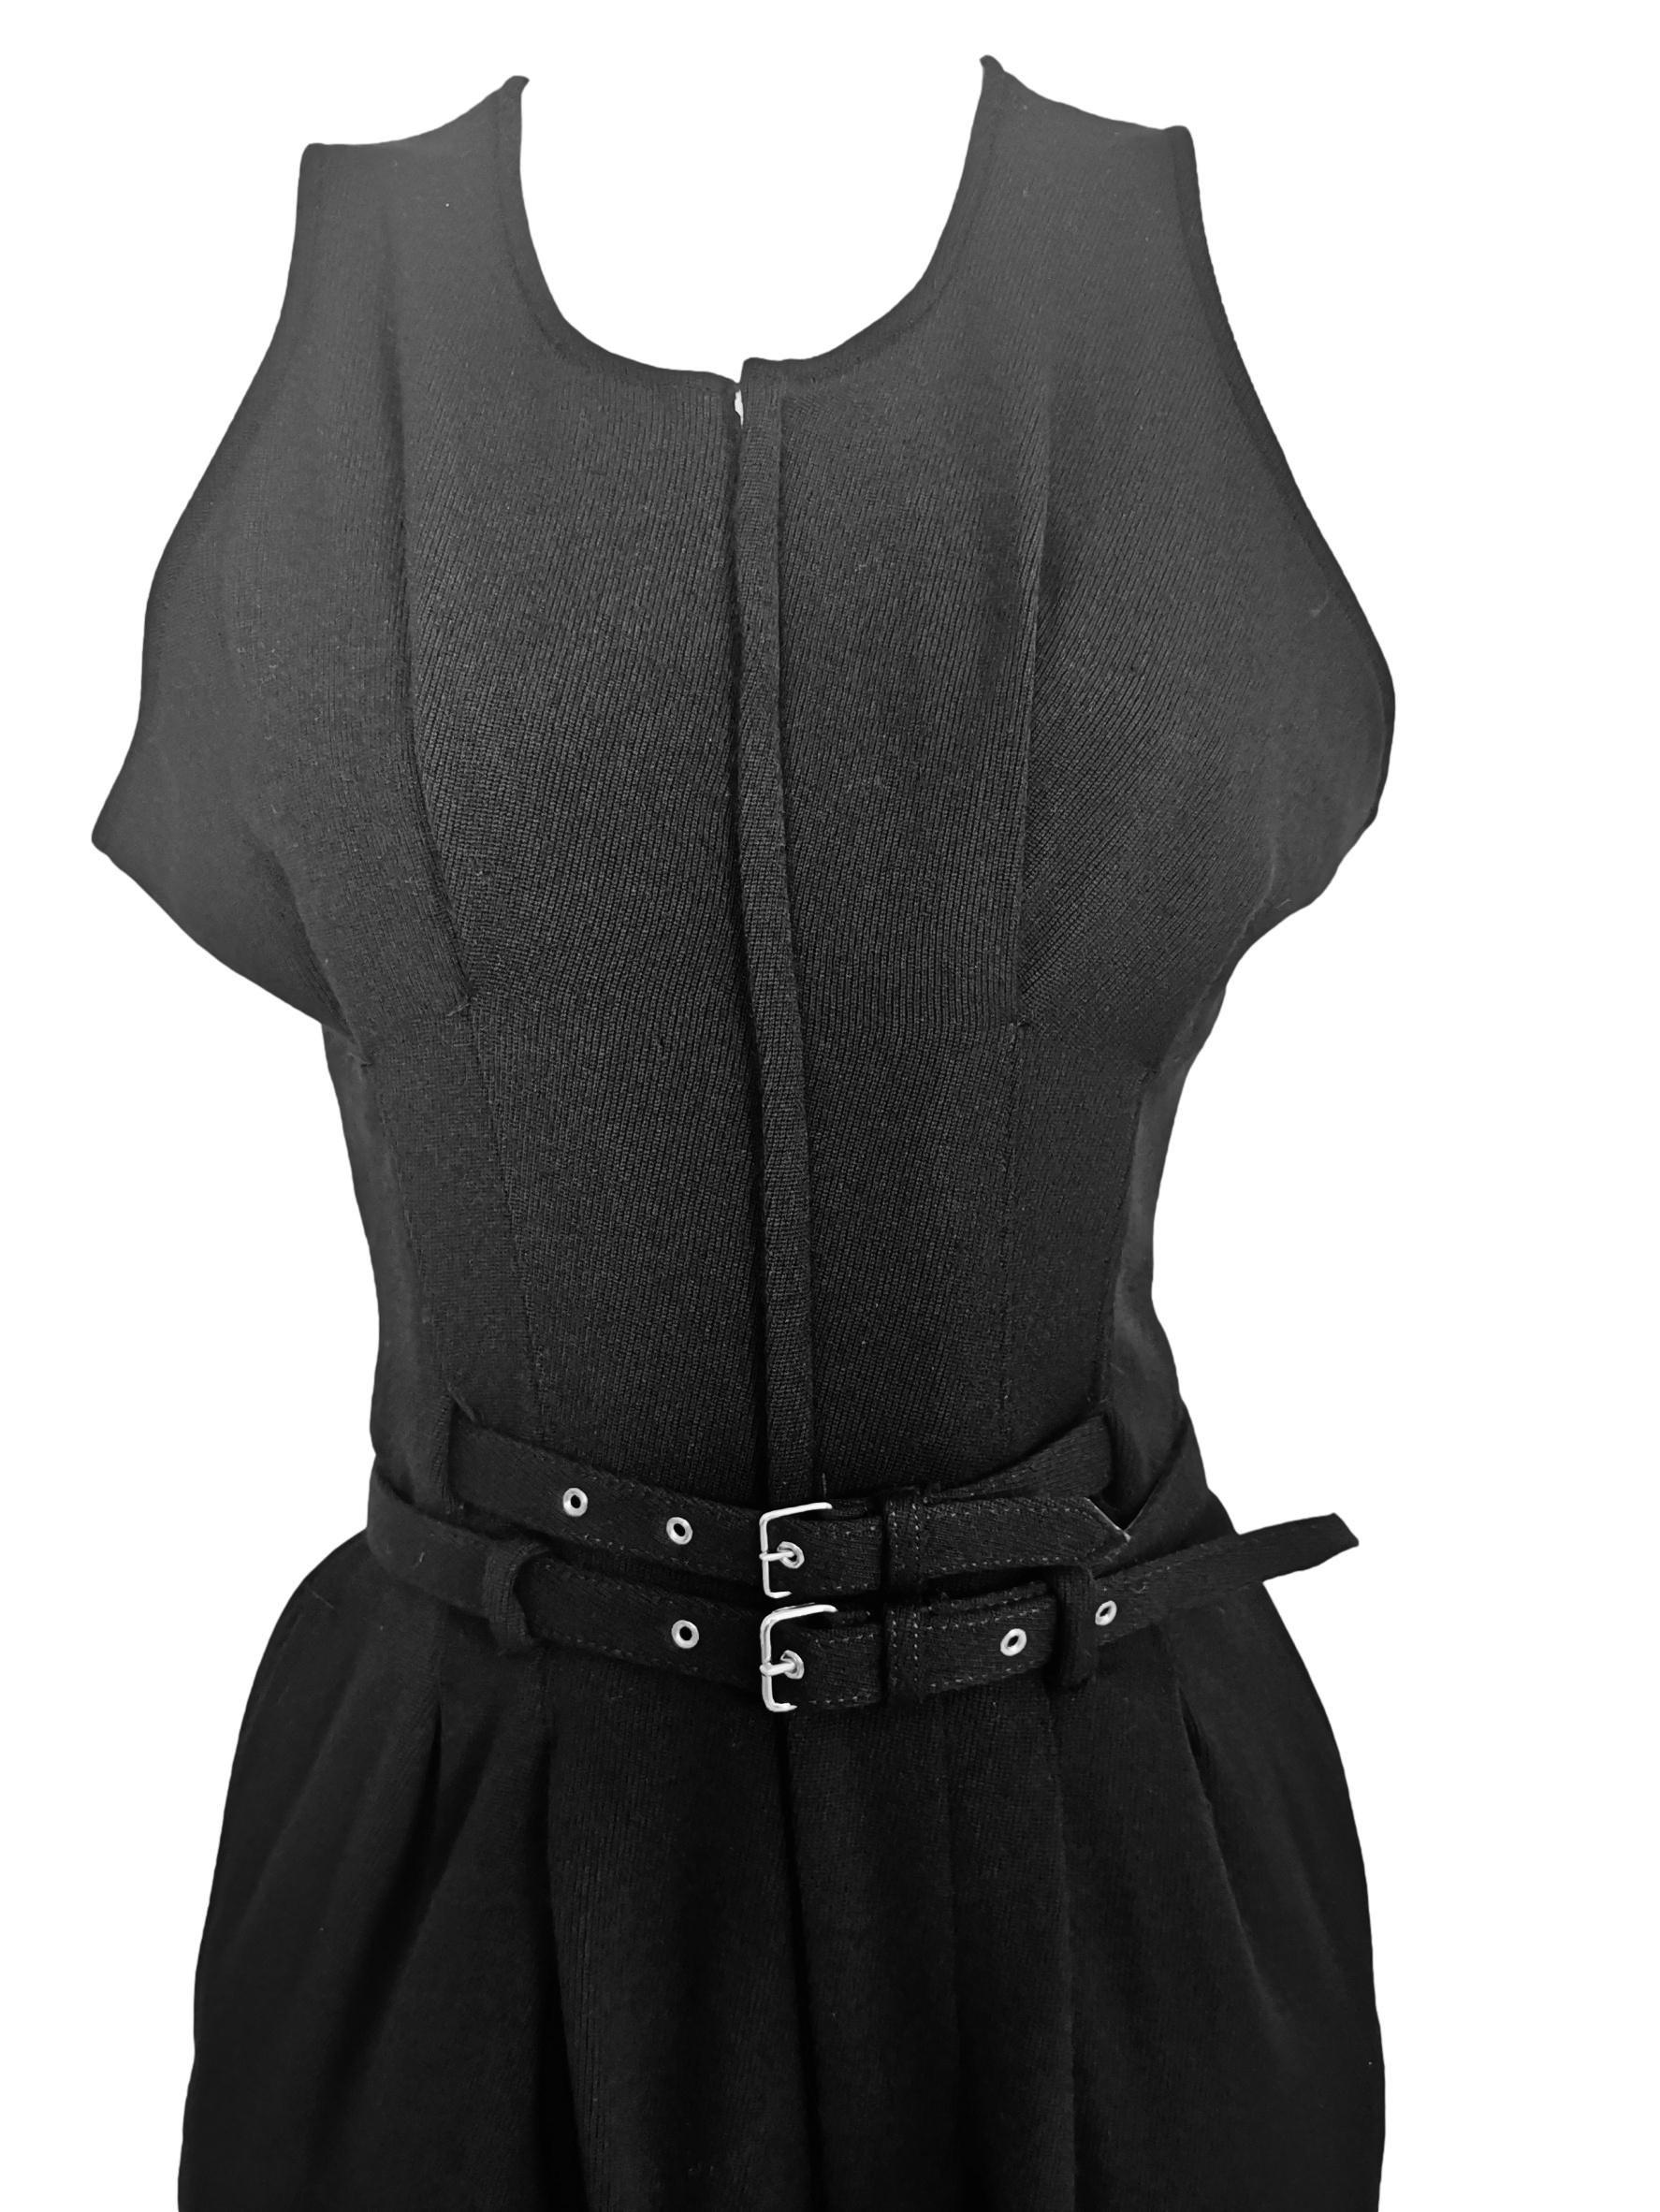 Comme des Garcons AD 1989
Black Wool Jumpsuit
Double Belted
Button Cuff Hem
Size S
26 Inch Waist
